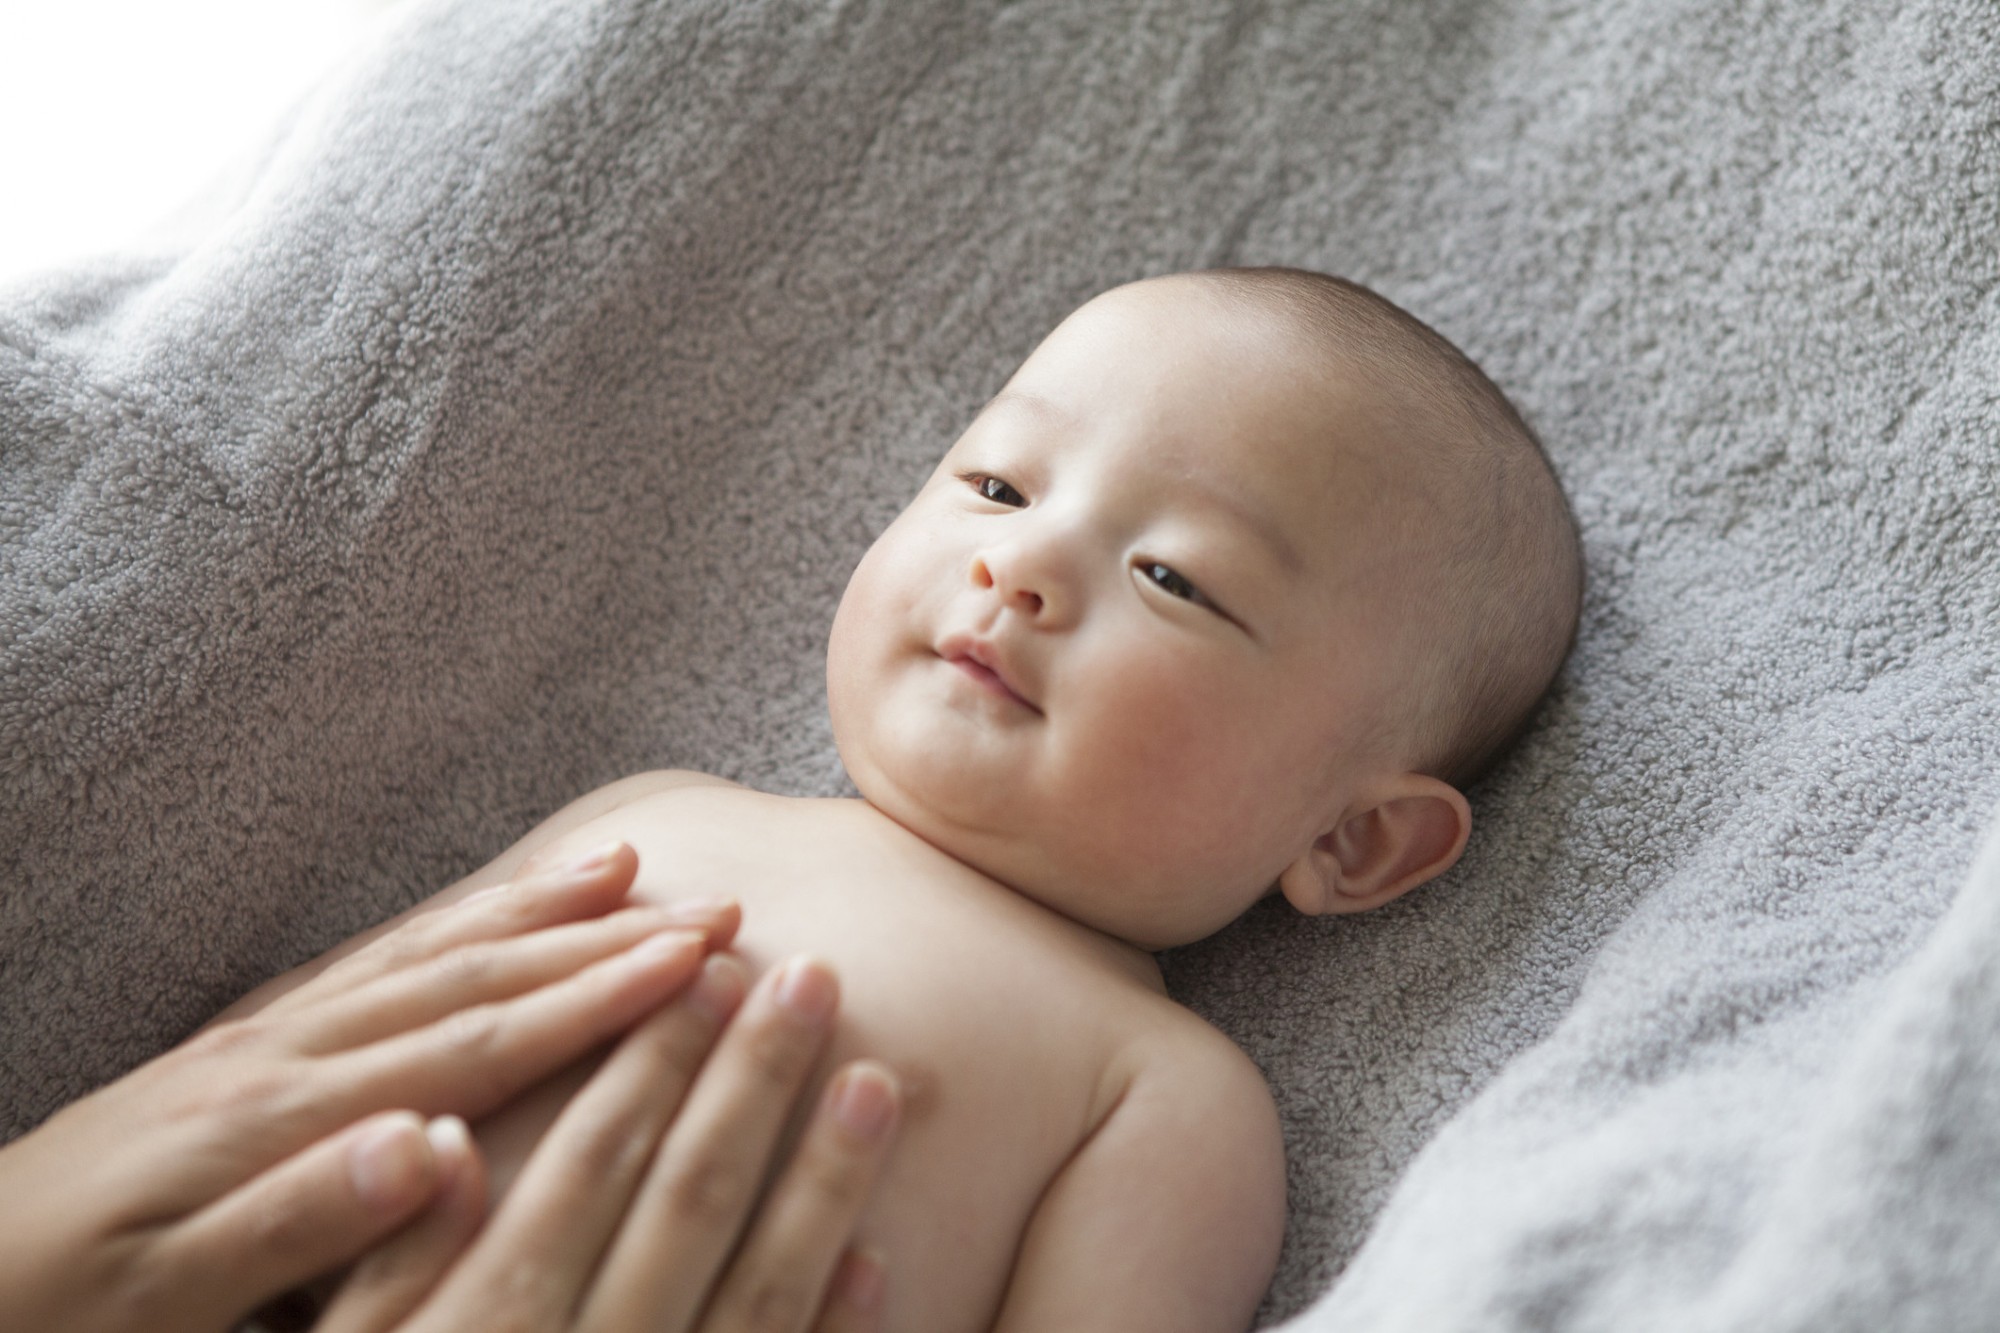 massagem shantala no bebê